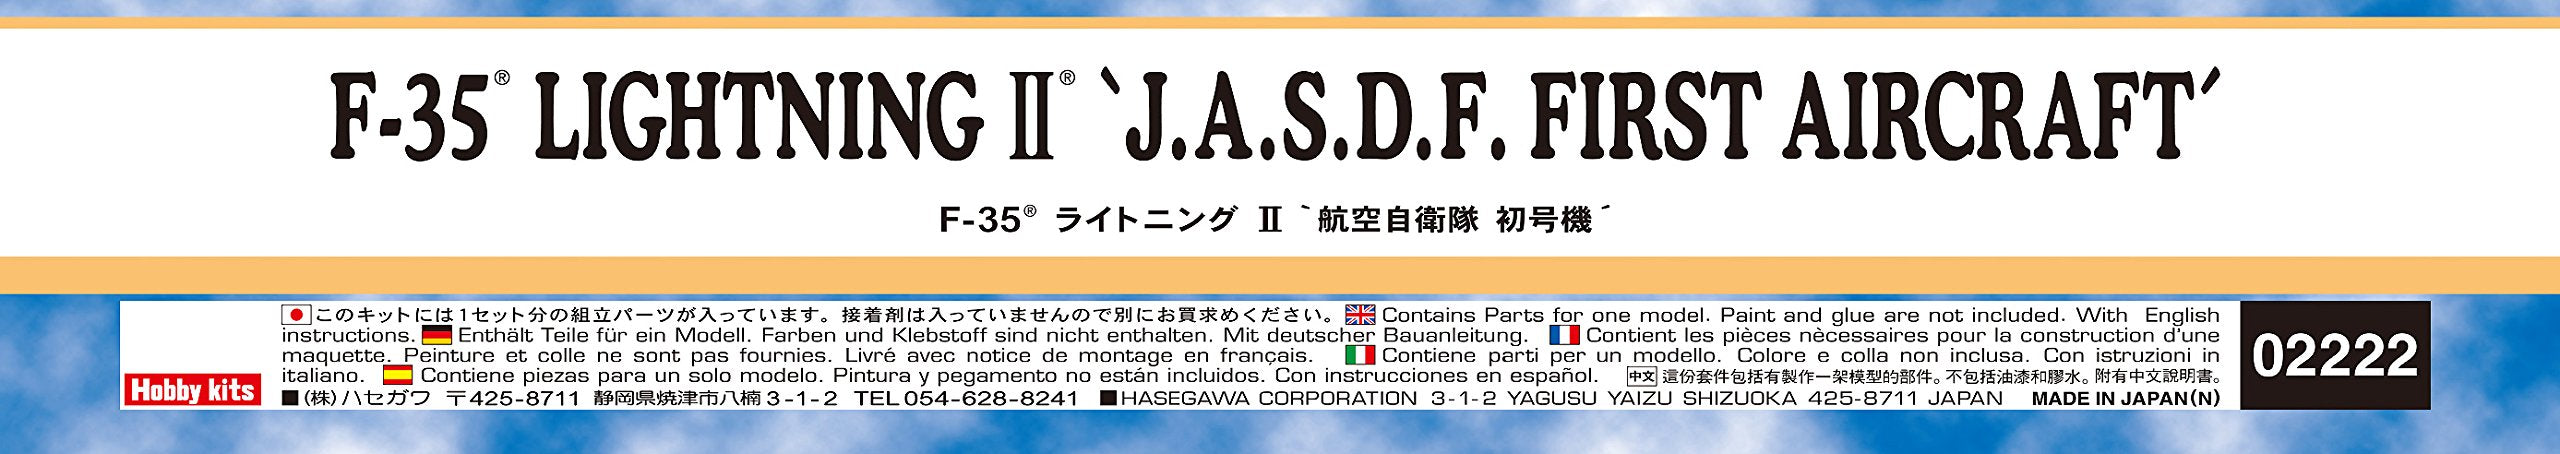 HASEGAWA 02222 F-35 Lightning Ii Jasdf First Aircraft 1/72 Scale Kit